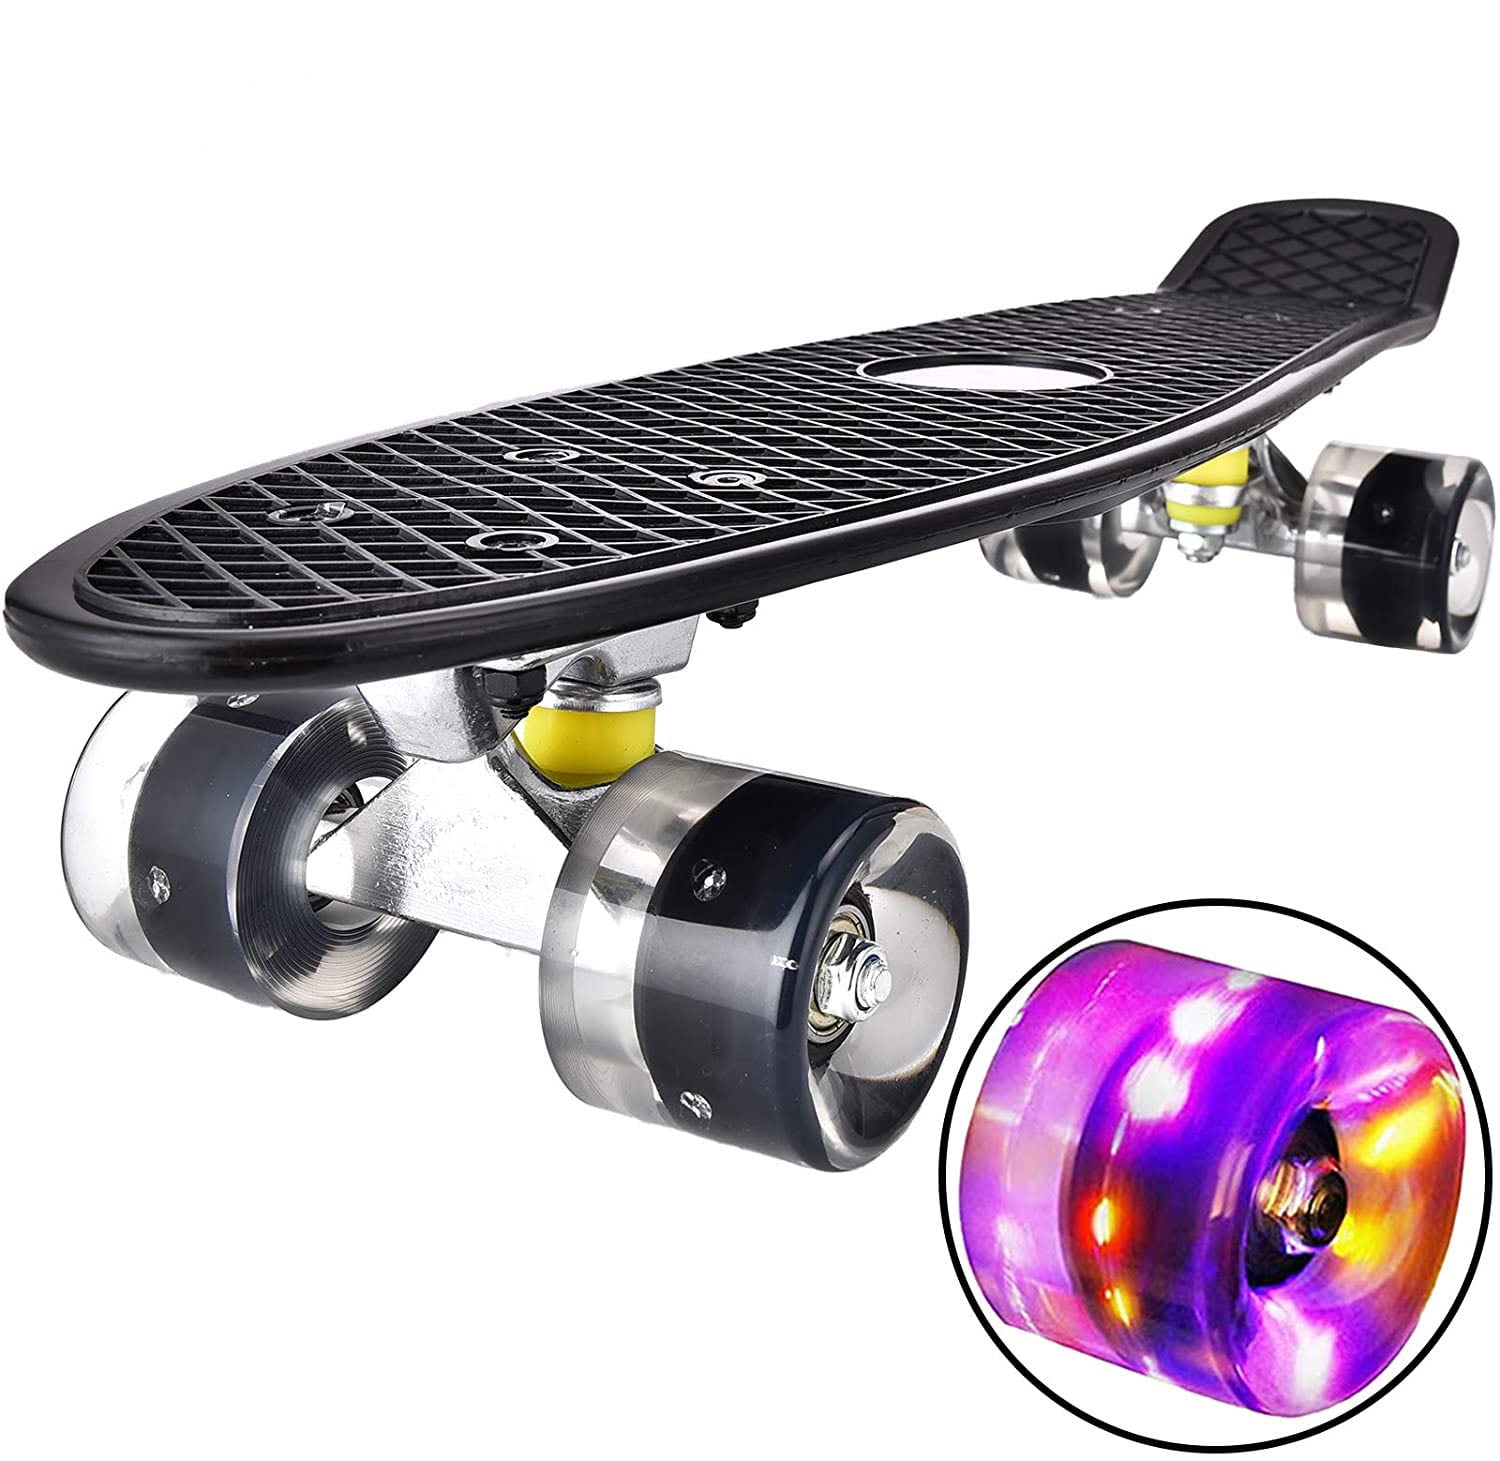 Longboard Skateboard Mini Cruiser Designed for Teens and Adults 31.5 Inch/Rose Skull Complete Skateboard